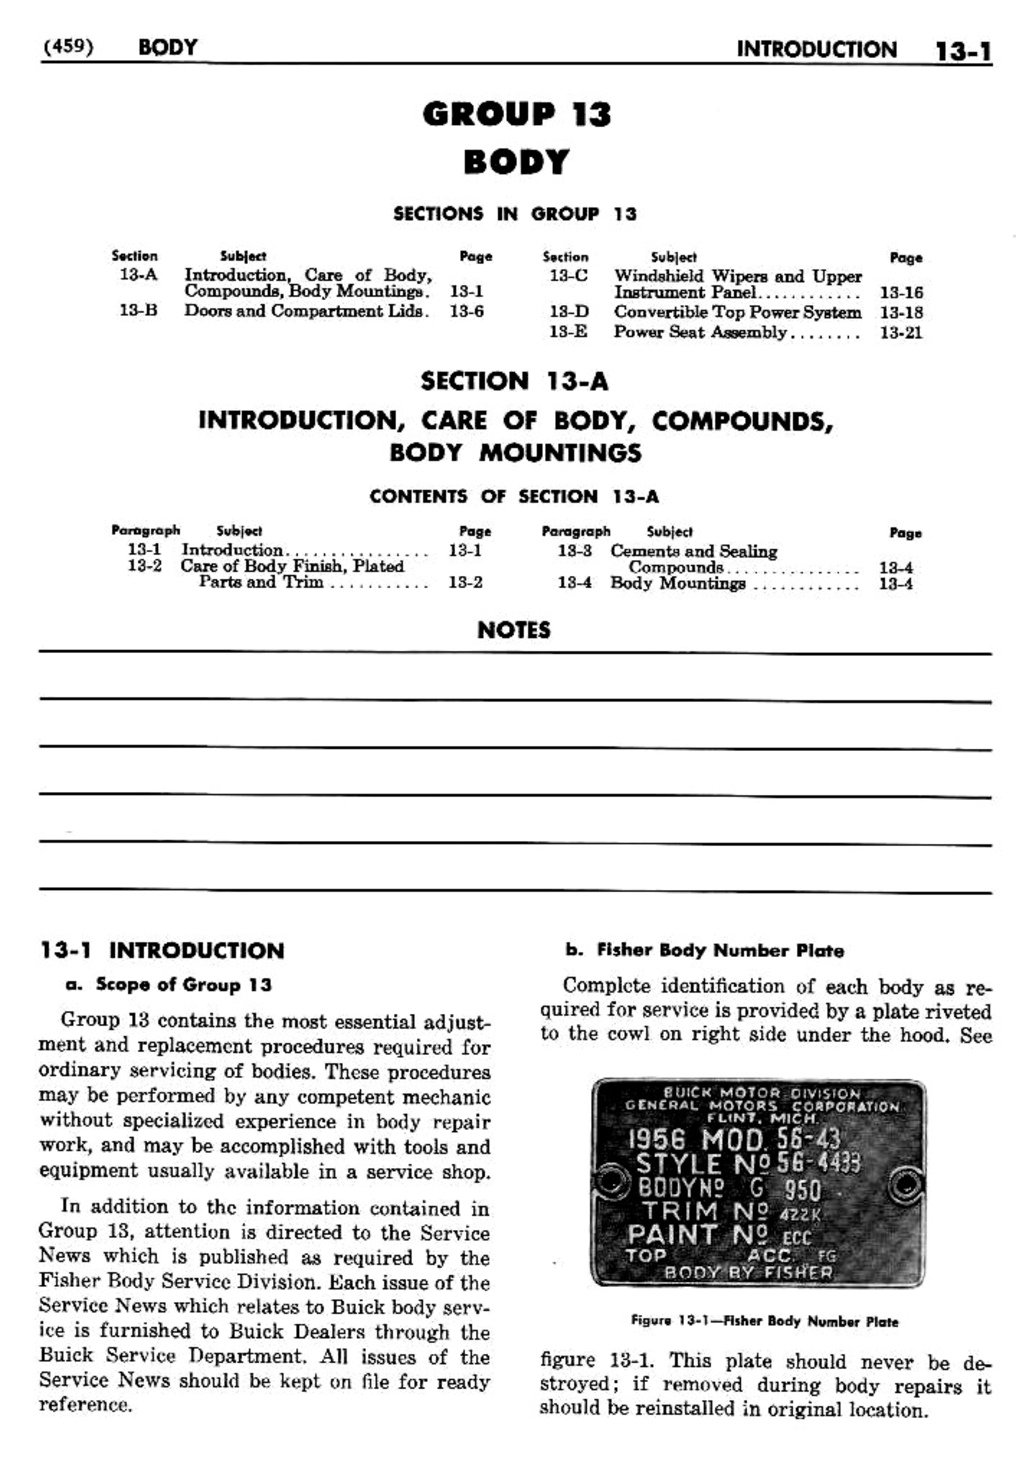 n_14 1956 Buick Shop Manual - Body-001-001.jpg